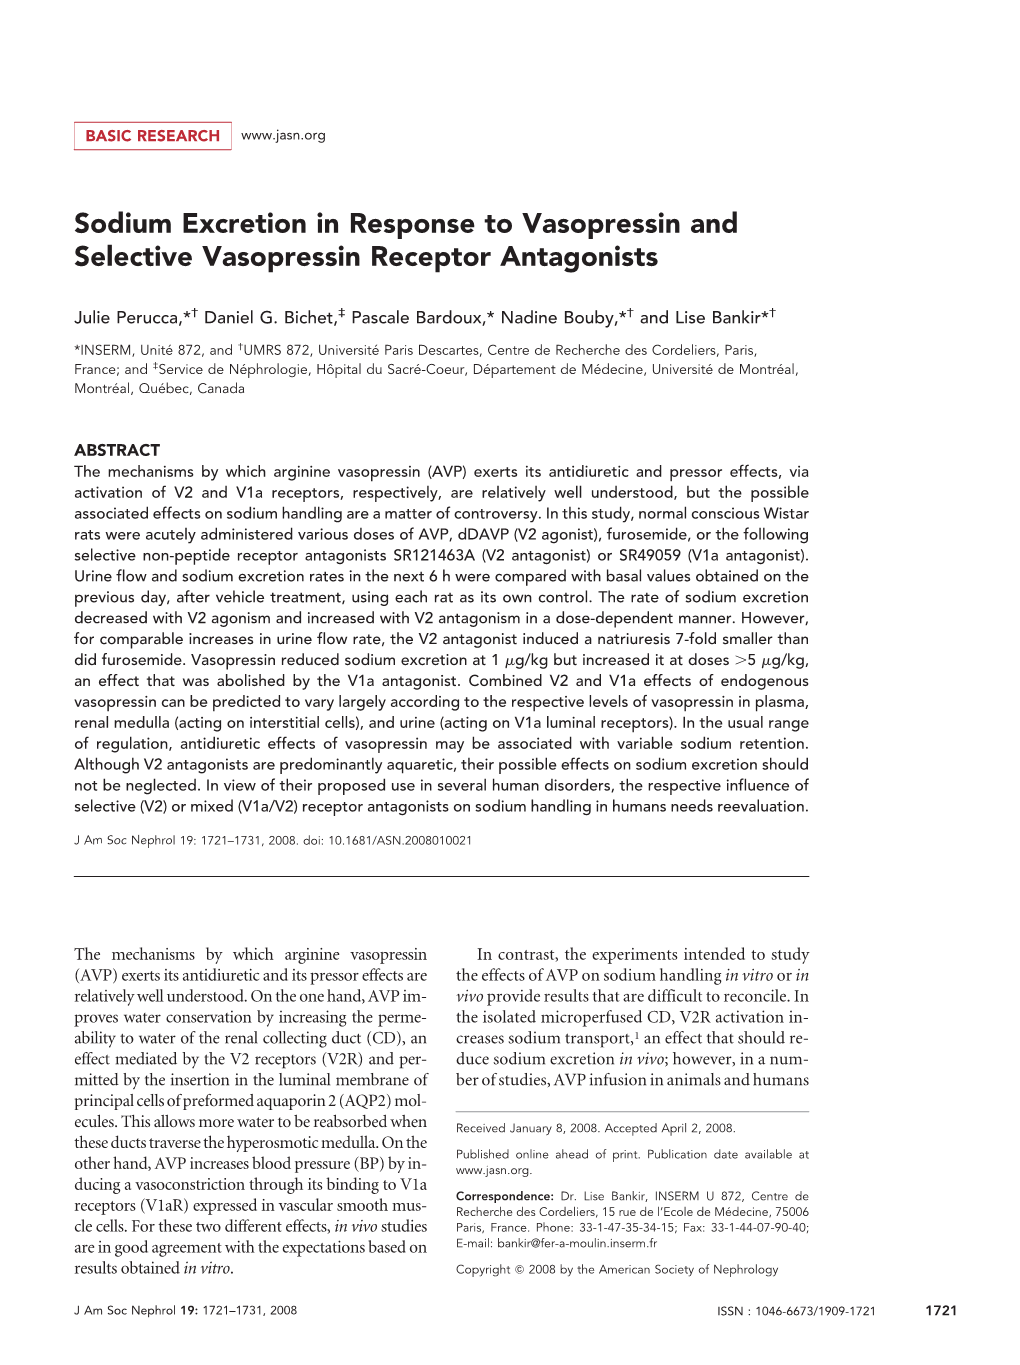 Sodium Excretion in Response to Vasopressin and Selective Vasopressin Receptor Antagonists